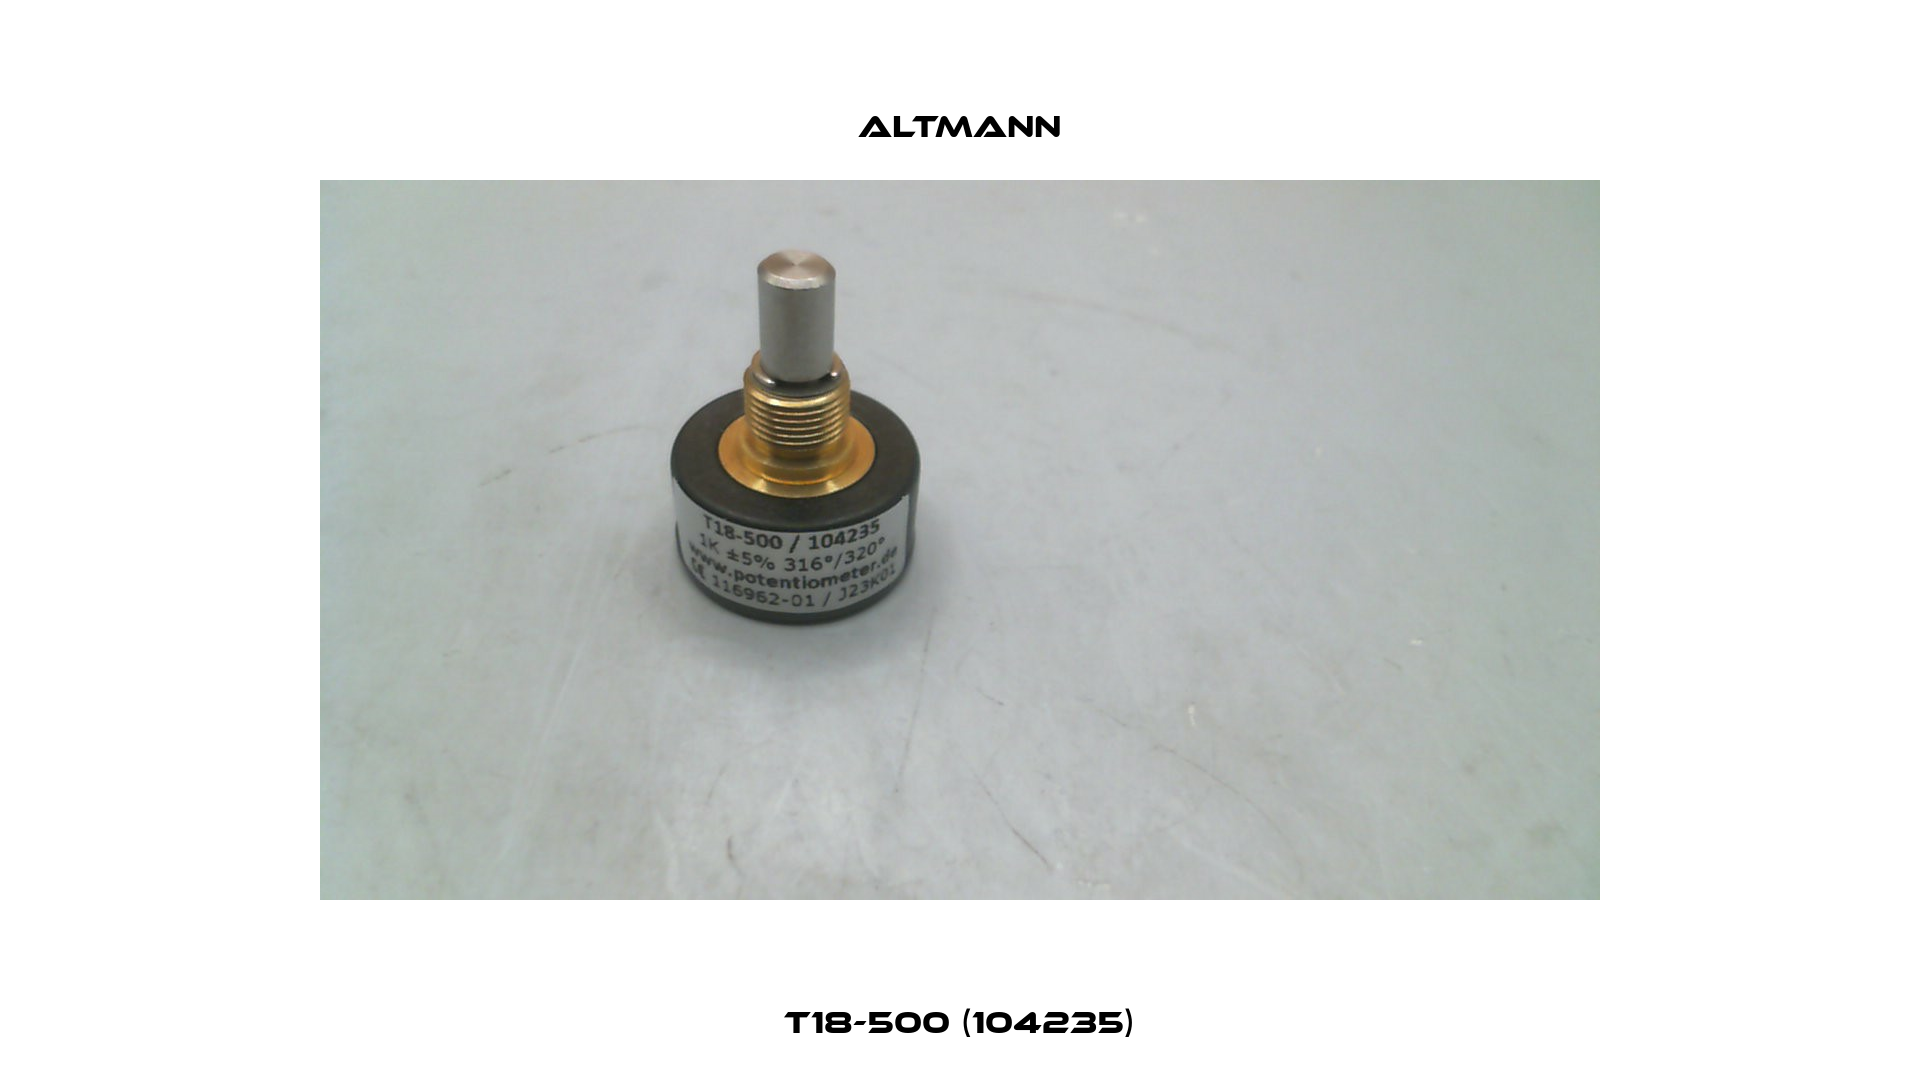 T18-500 (104235) ALTMANN